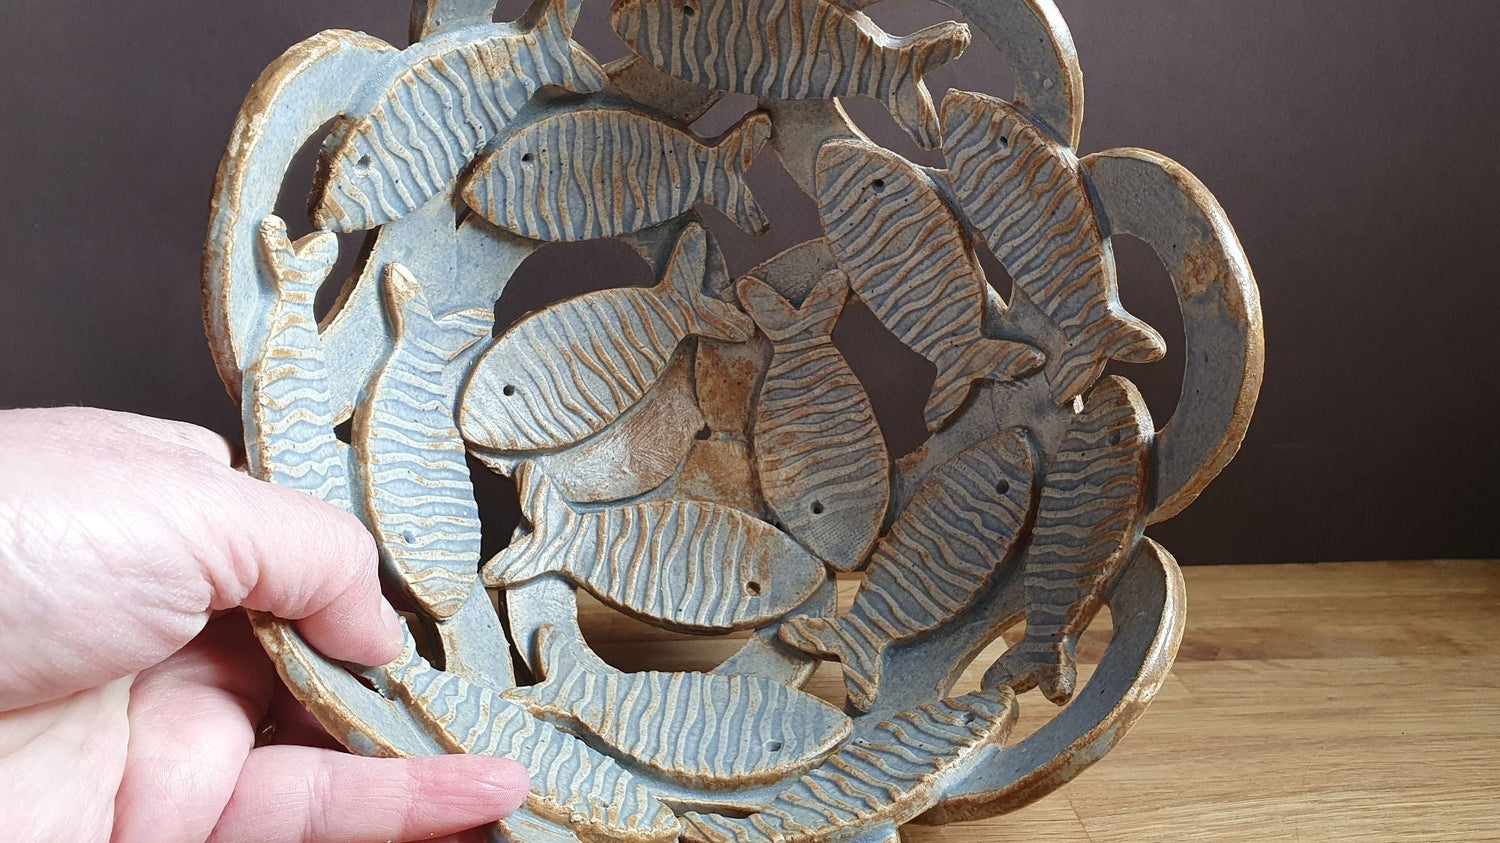 Sculptural handmade ceramic image